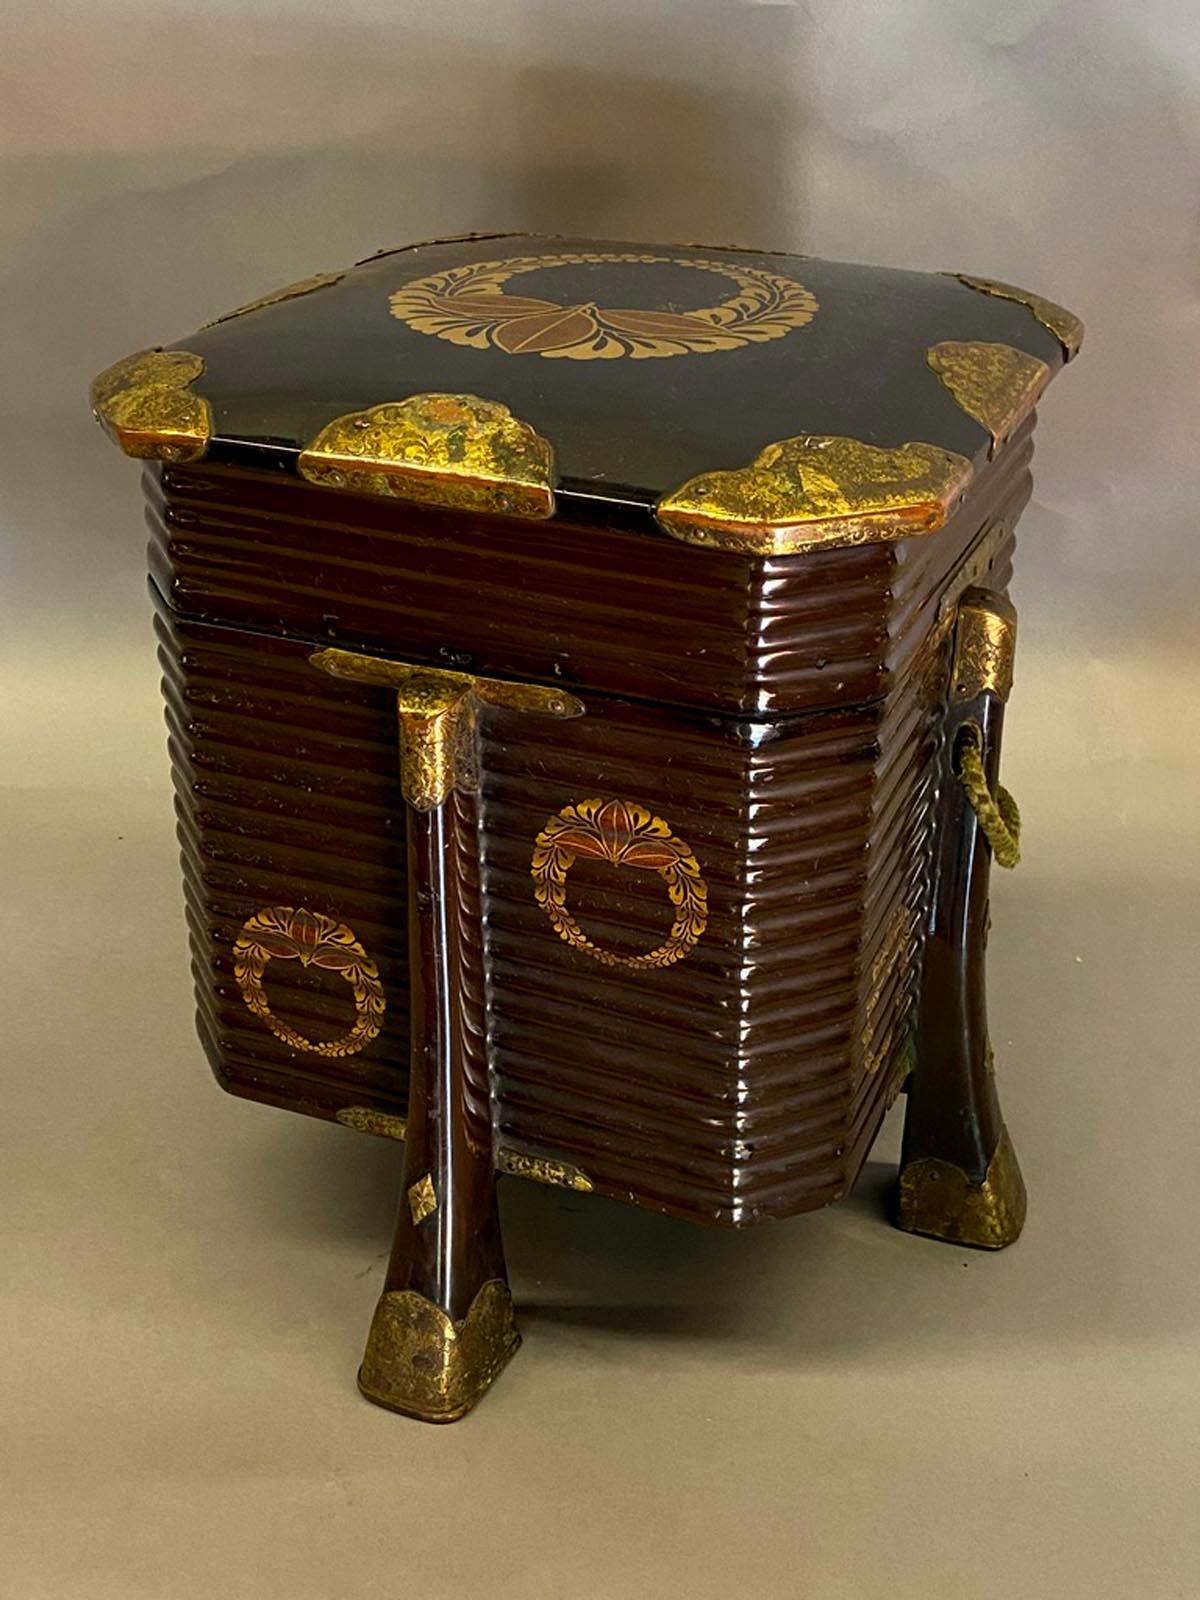 Edo 19th Century Japanese Hokkai, Lacquered Decorative Box in Gold and Black